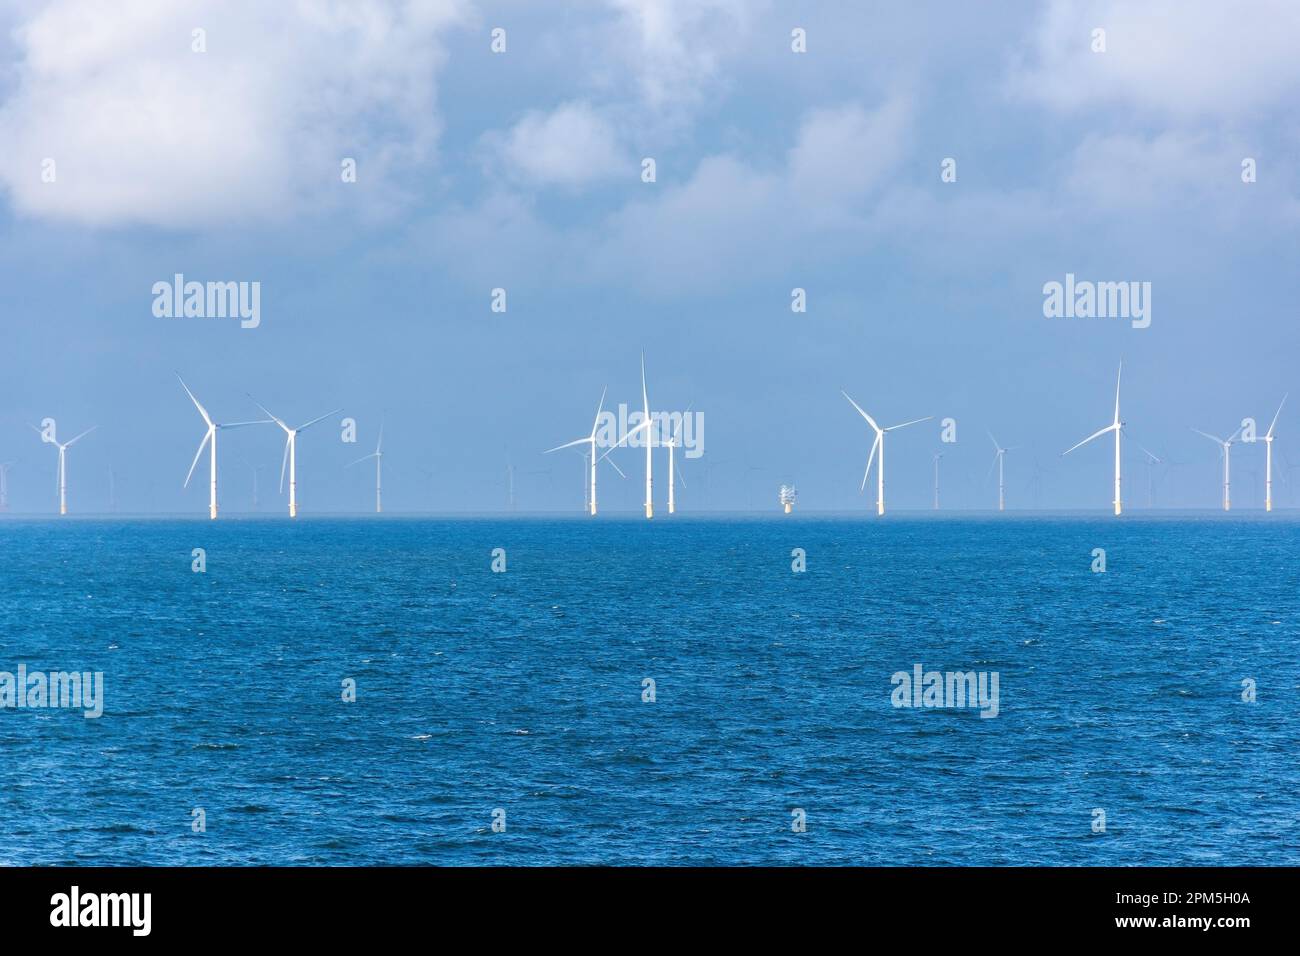 Alpha Ventus Offshore Wind Farm from P&O Iona cruise ship, North Sea, Europe Stock Photo